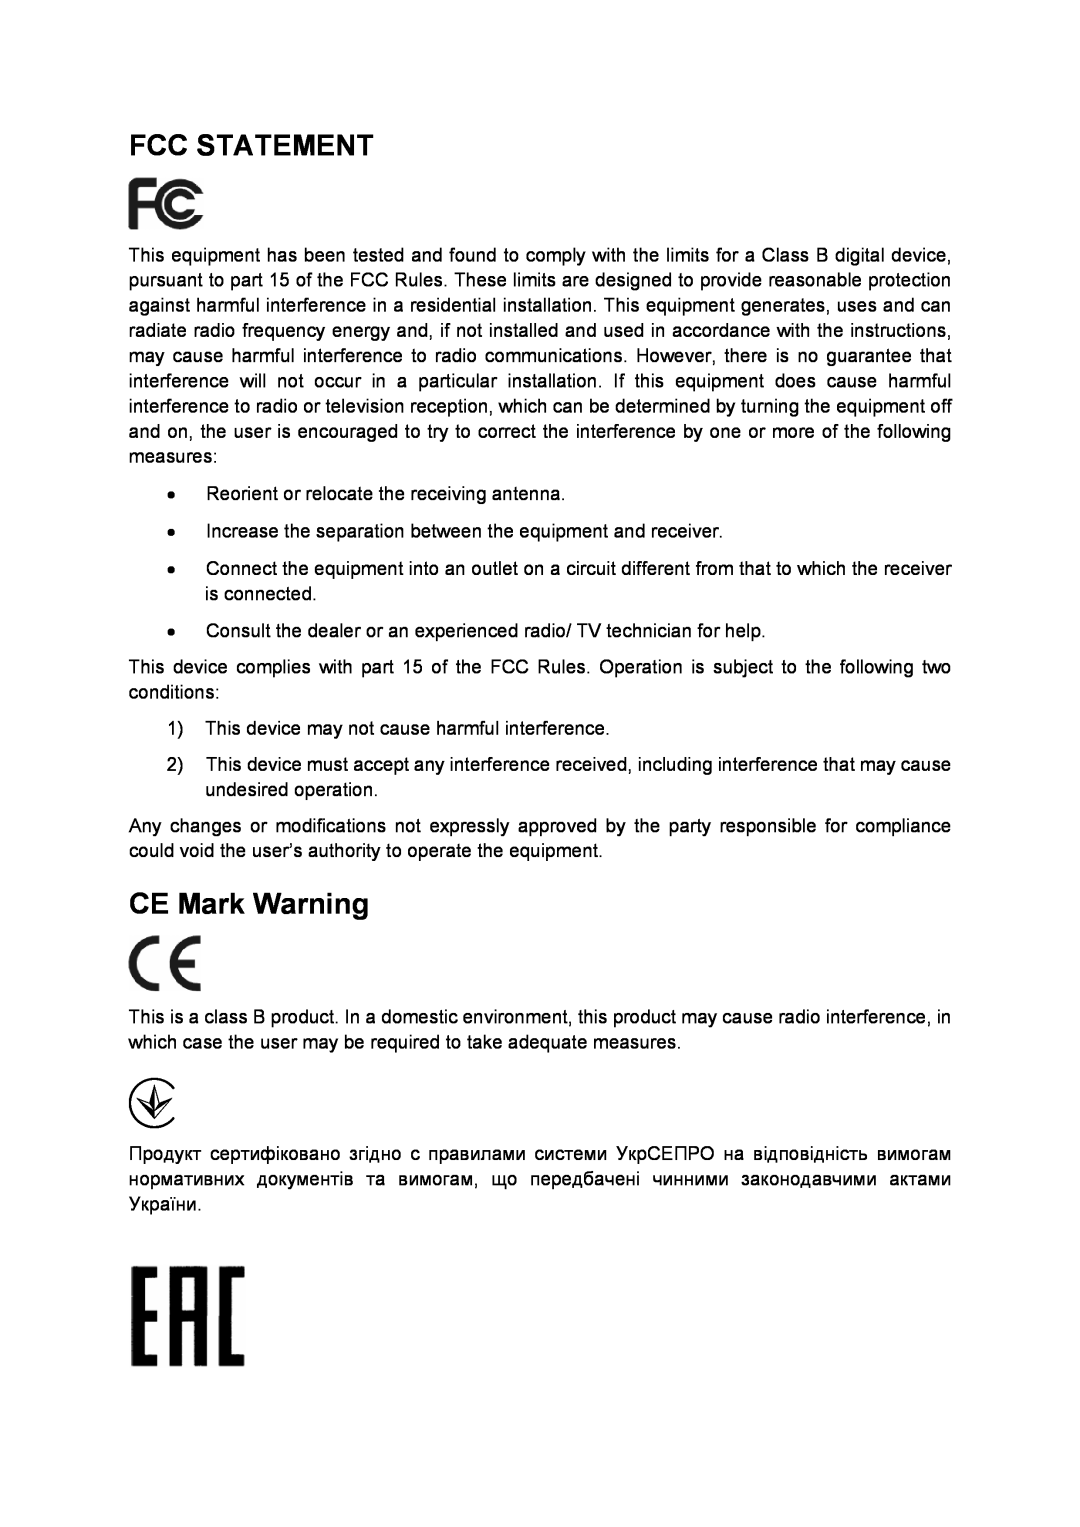 TP-Link TX-6610 manual Fcc Statement, CE Mark Warning 